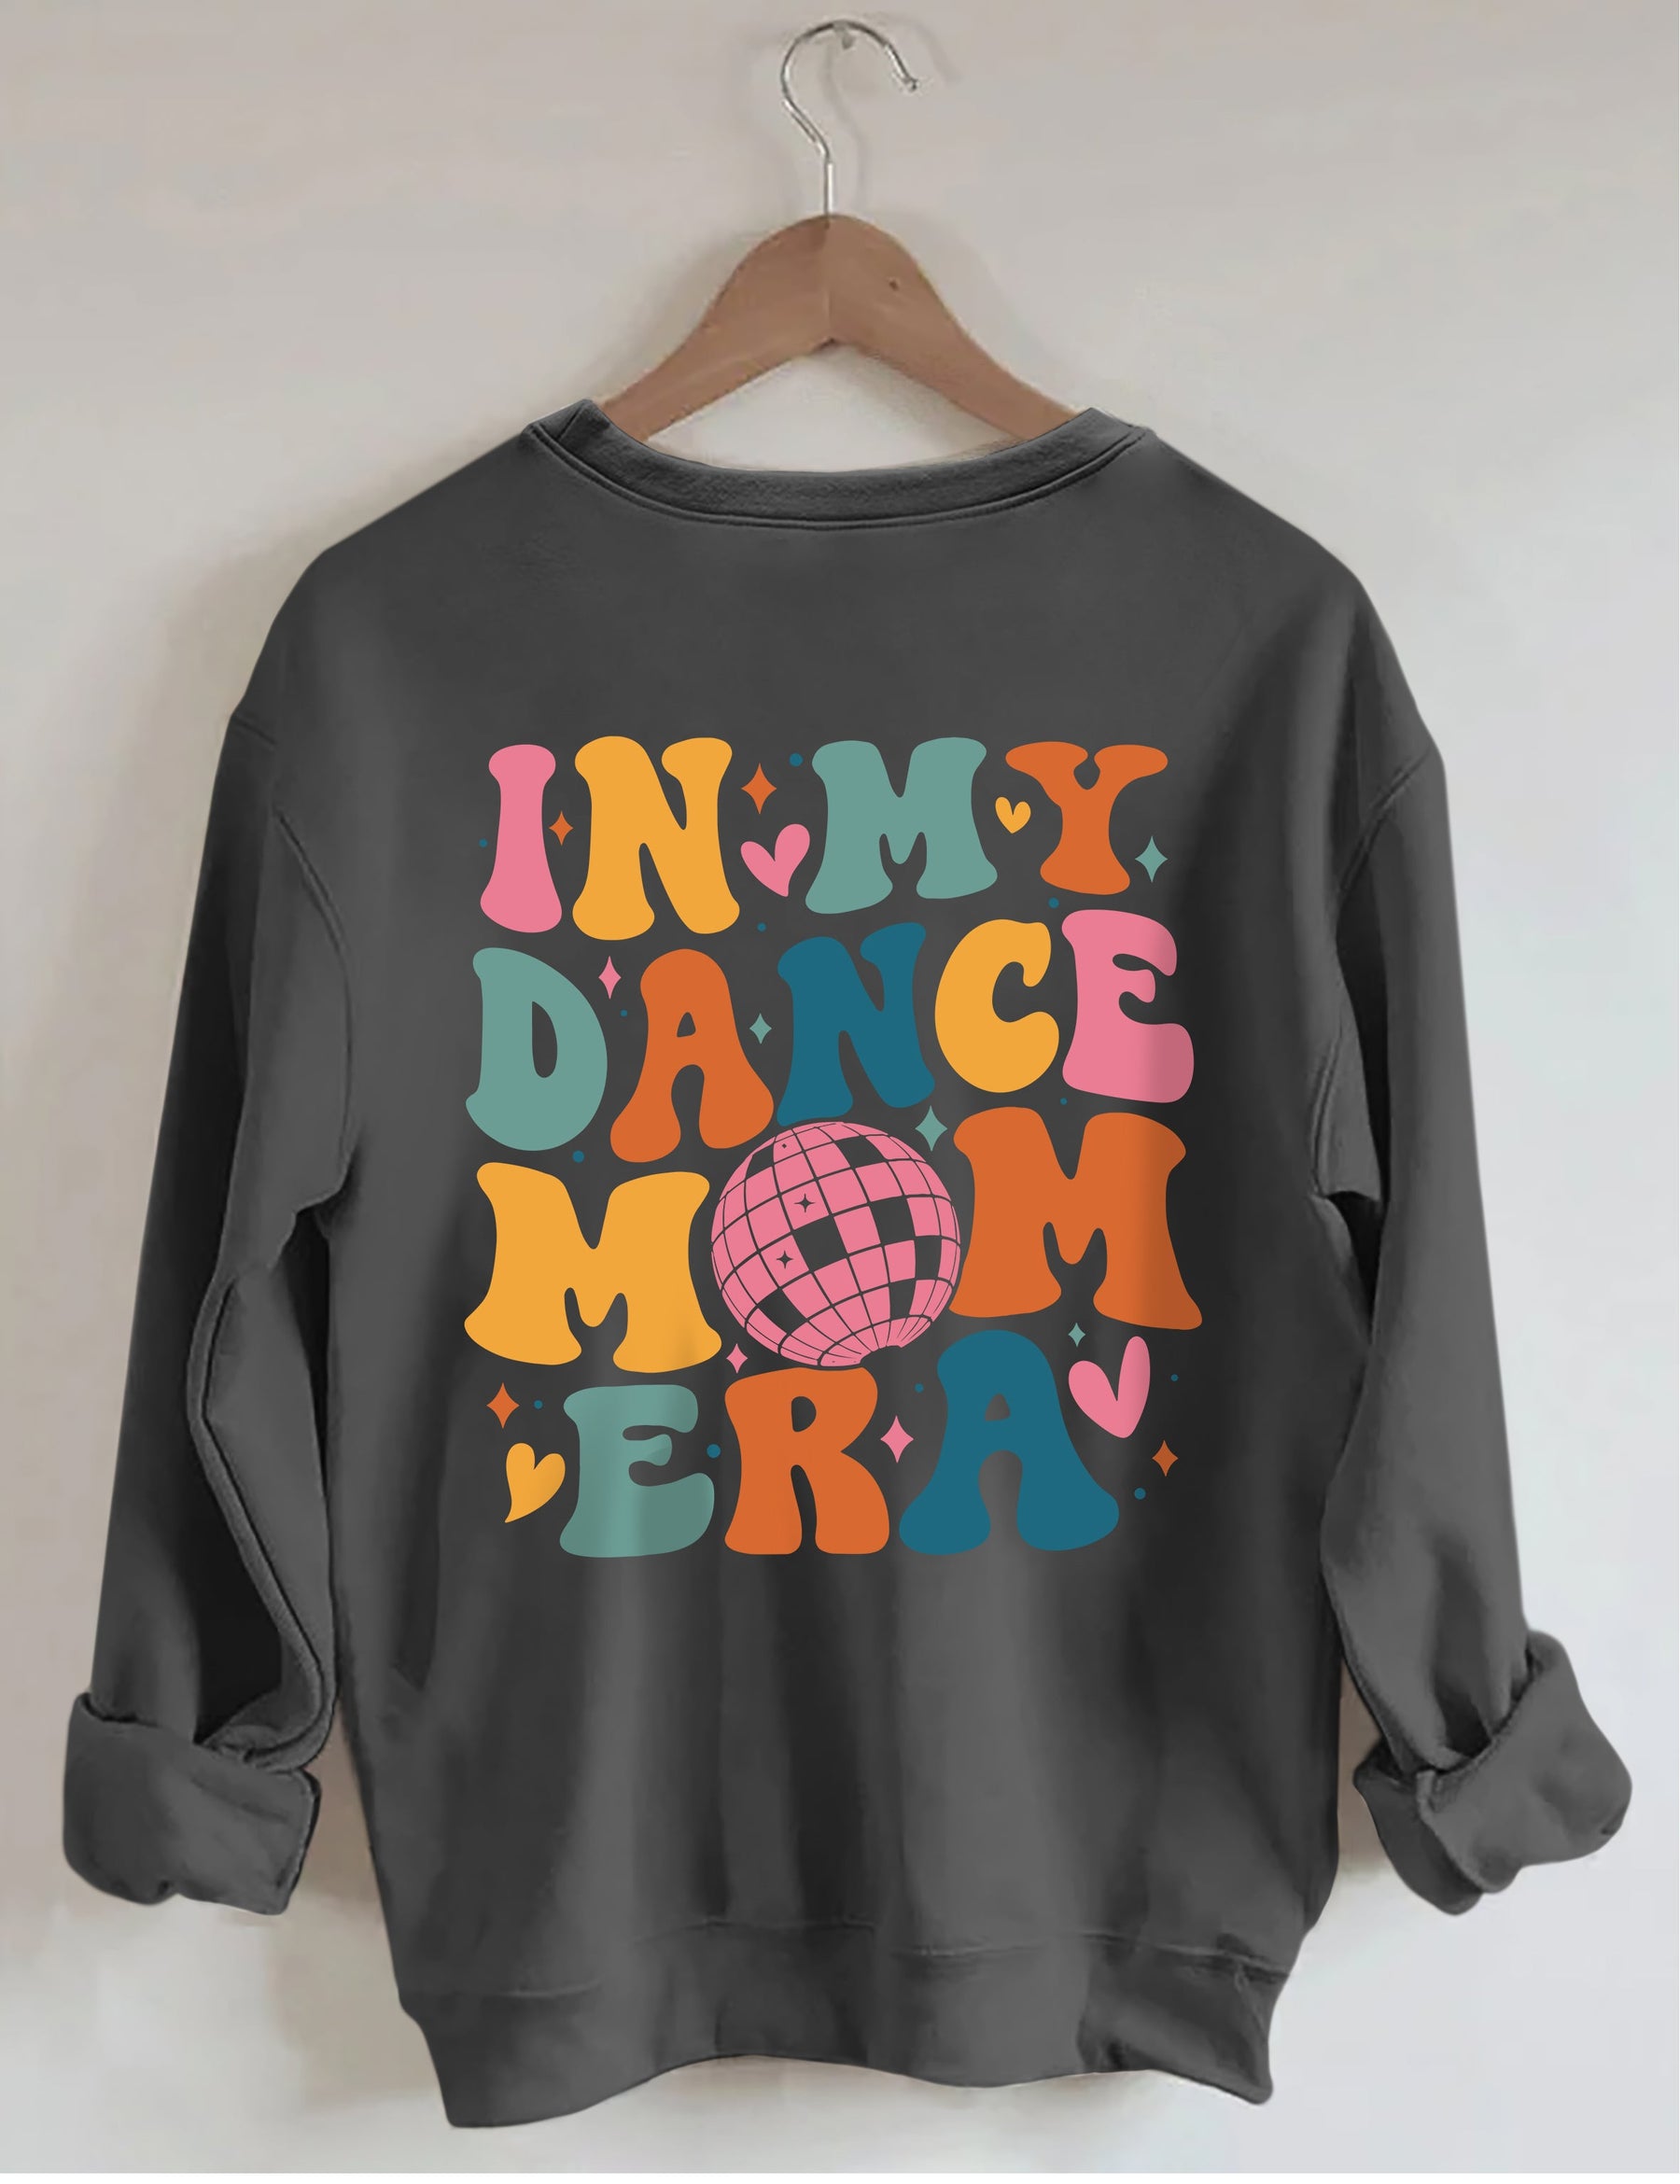 In My Dance Mom Era Sweatshirt